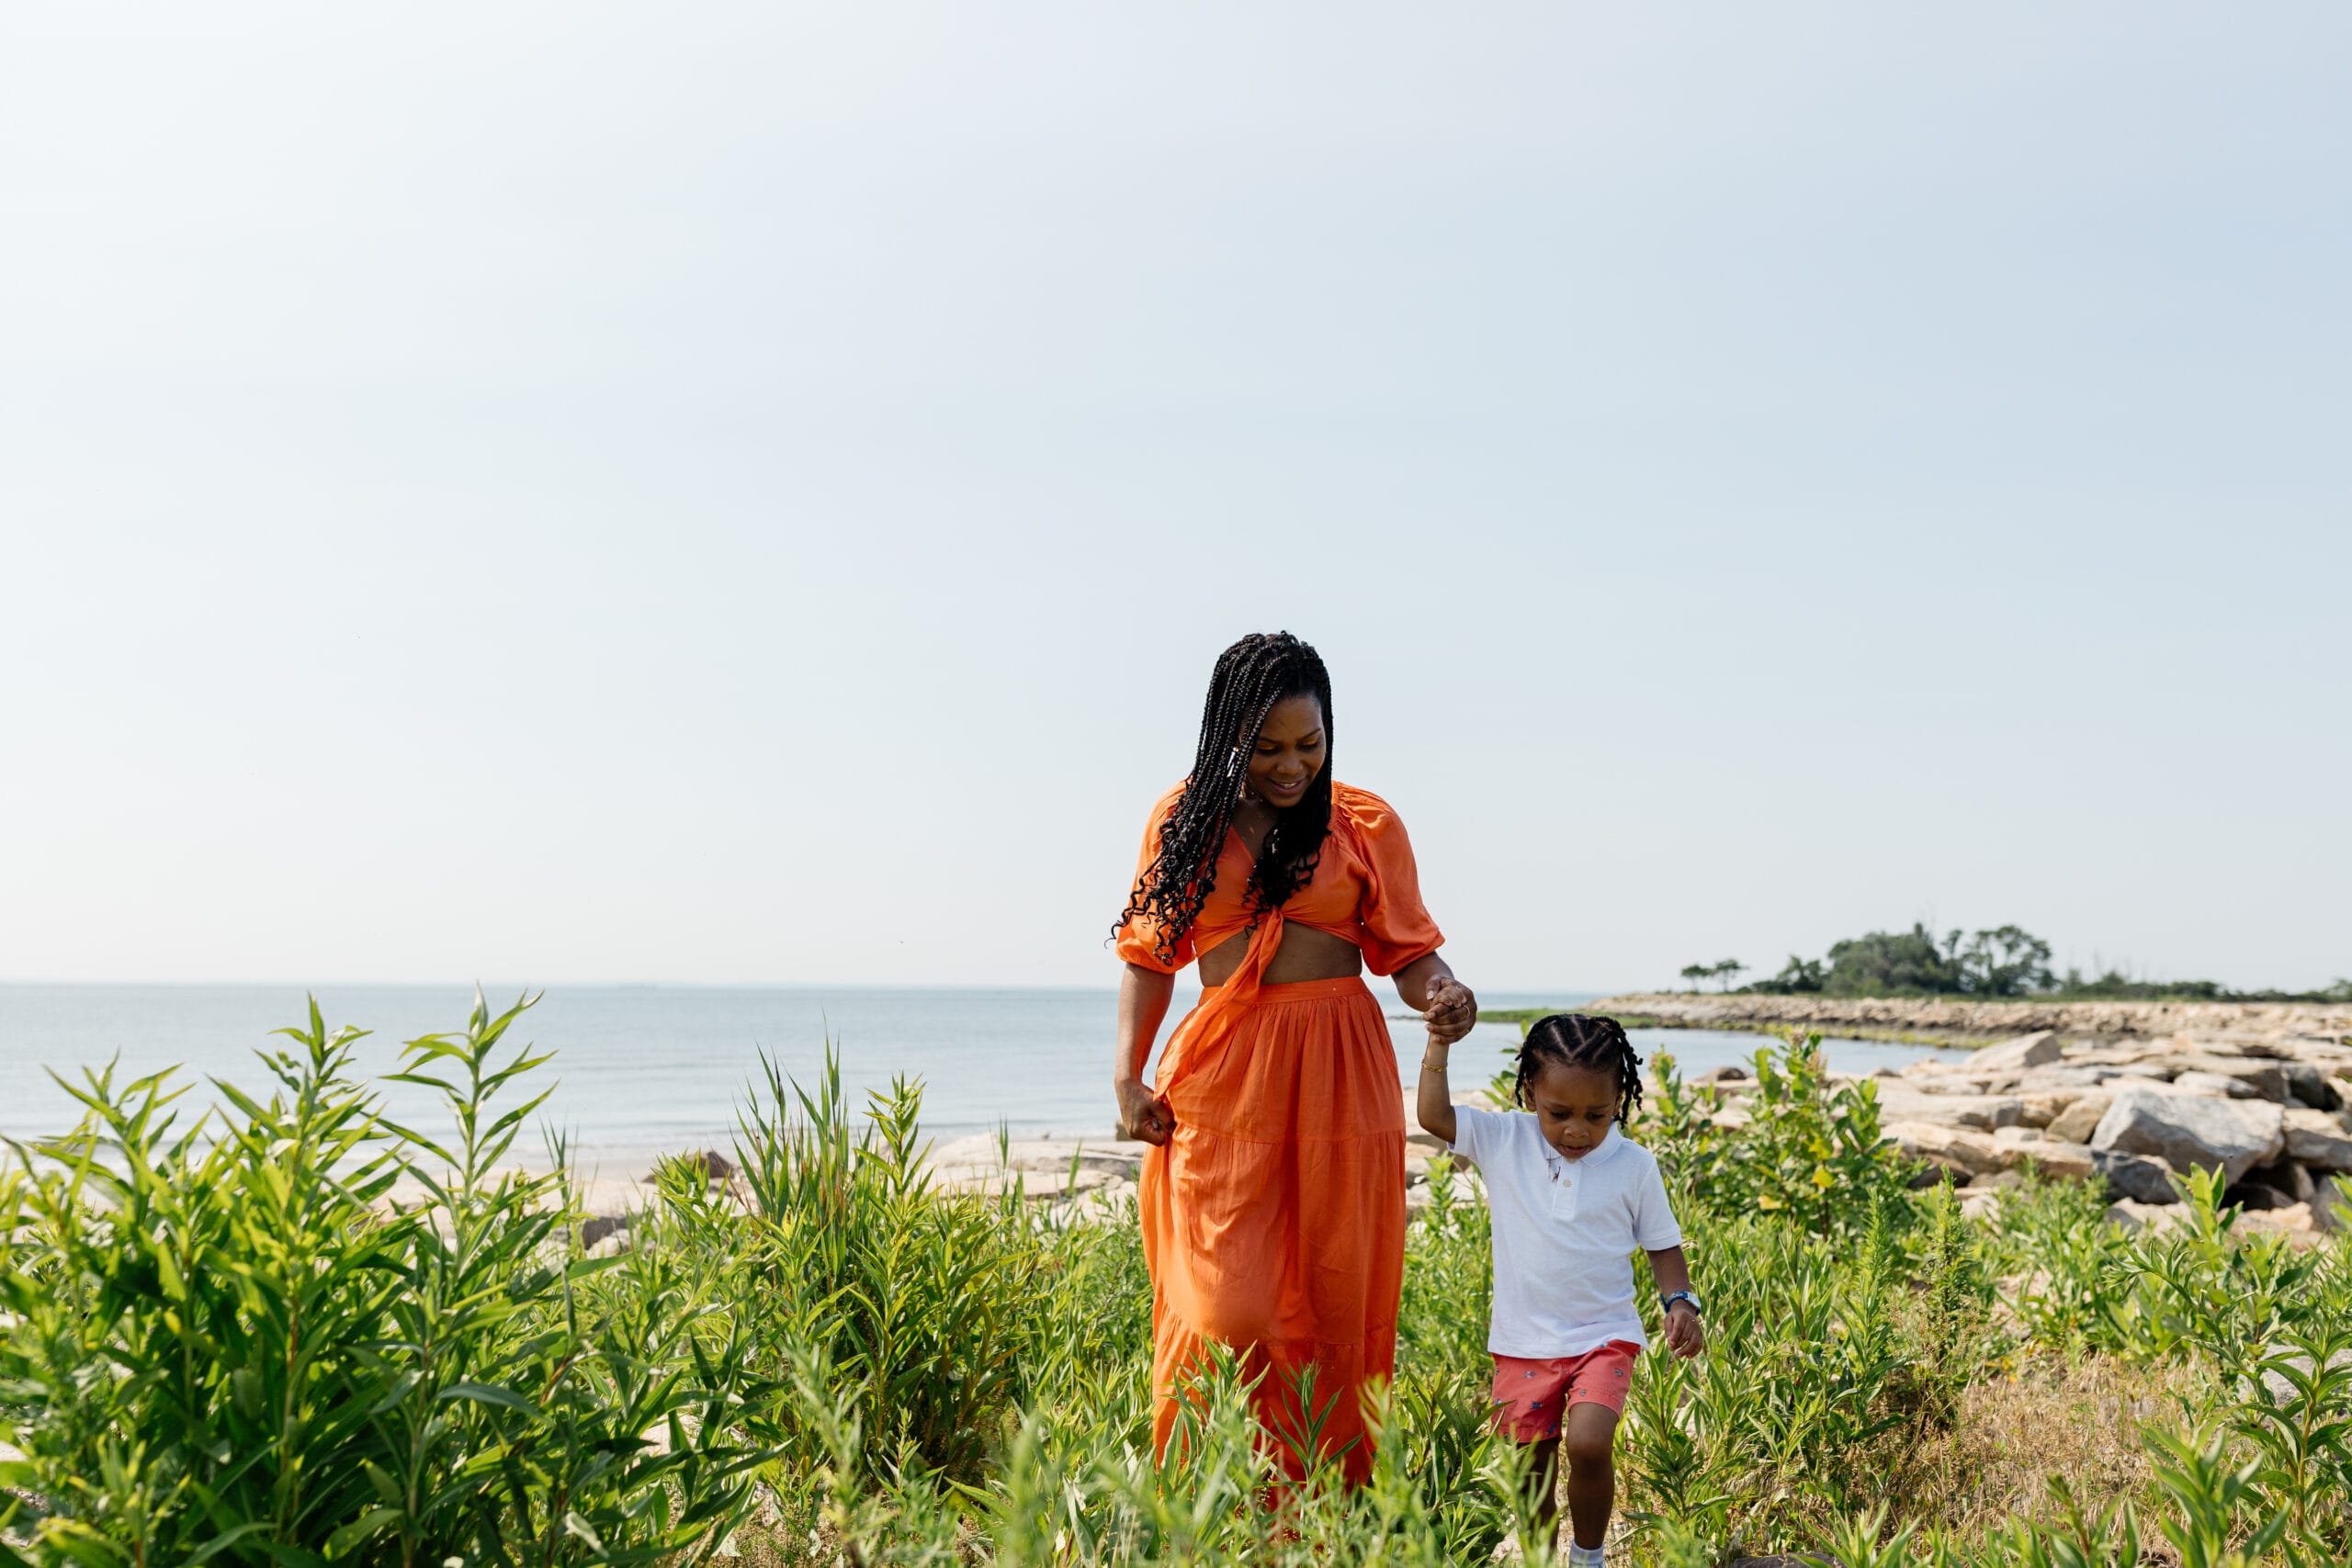 A woman in an orange dress and a child walking through tall grass near the ocean.